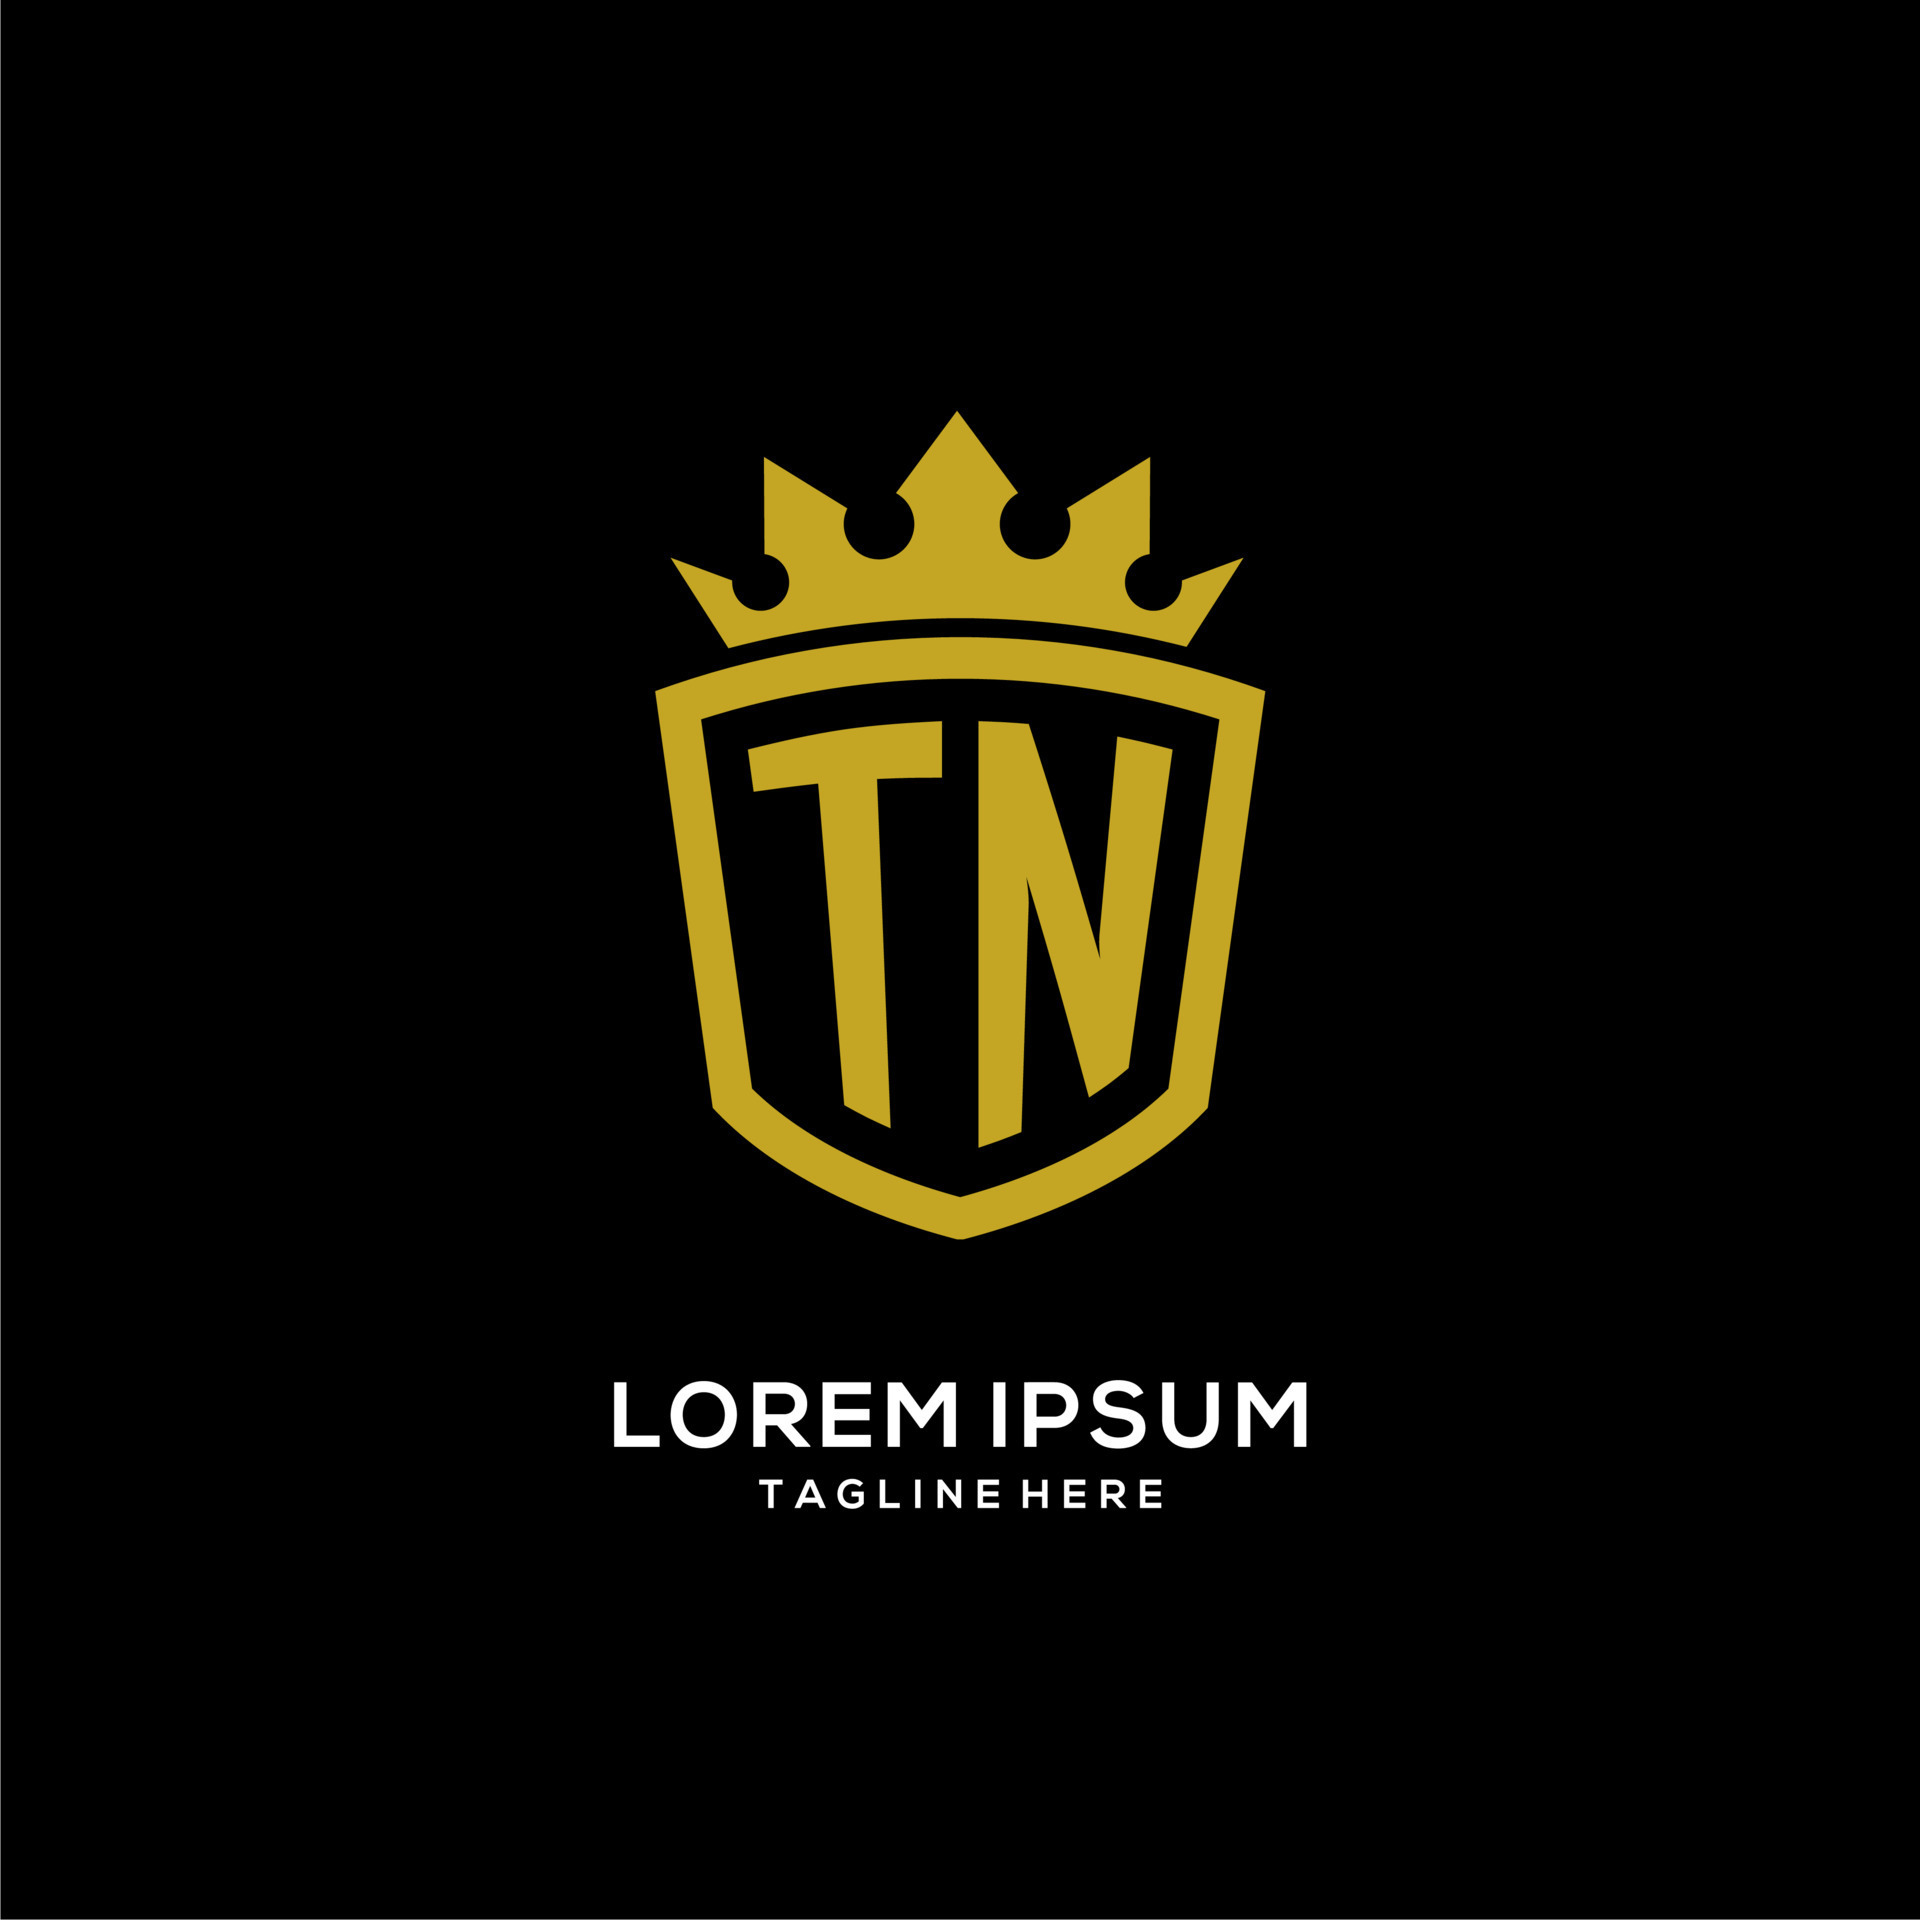 Initial TN logo shield crown style, luxury elegant monogram logo